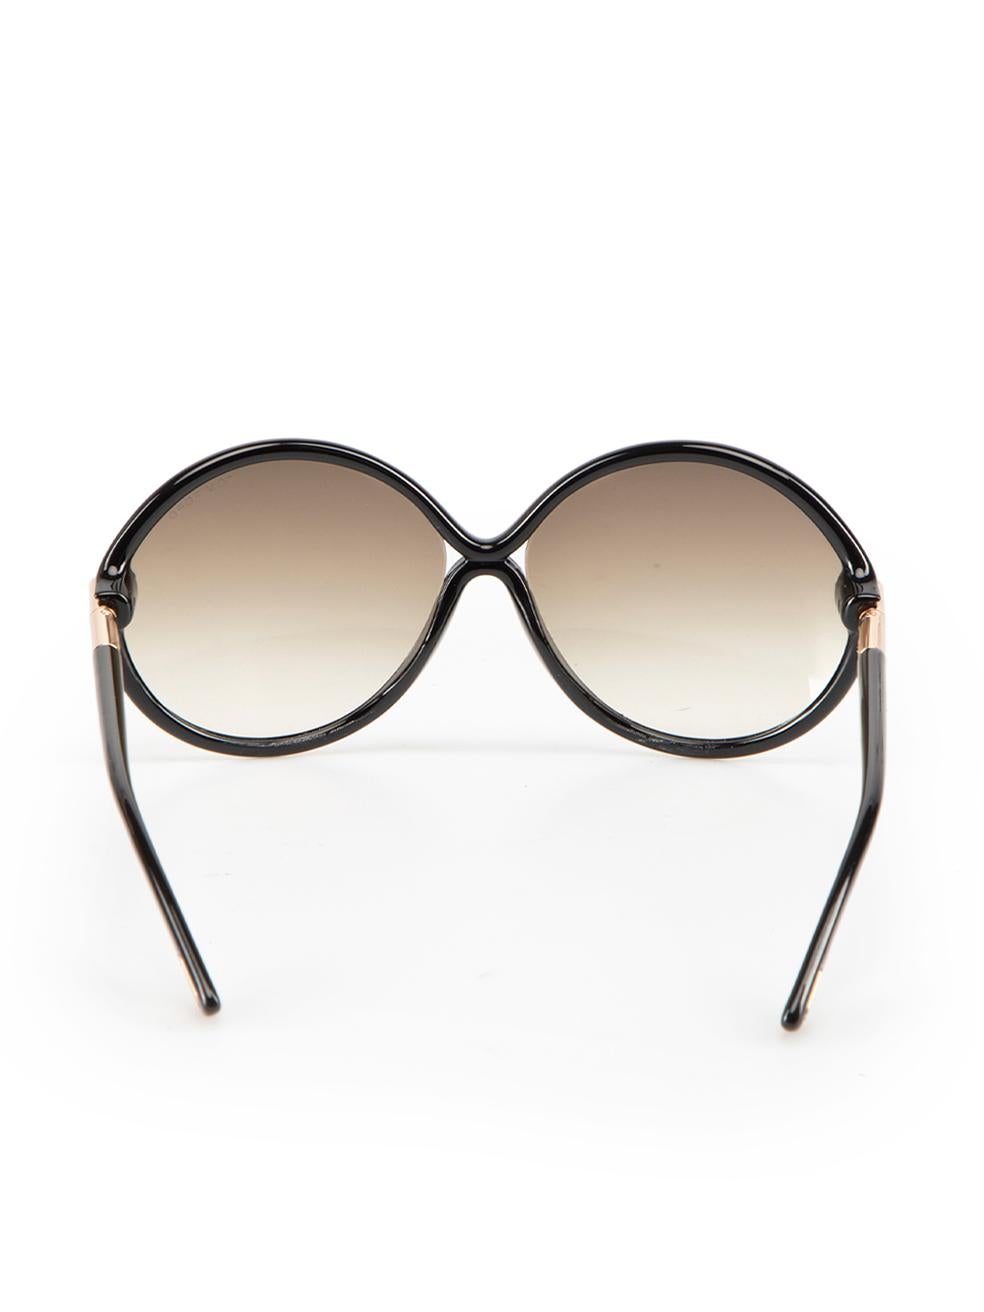 Beige Tom Ford Black Round Oversized Rita Sunglasses